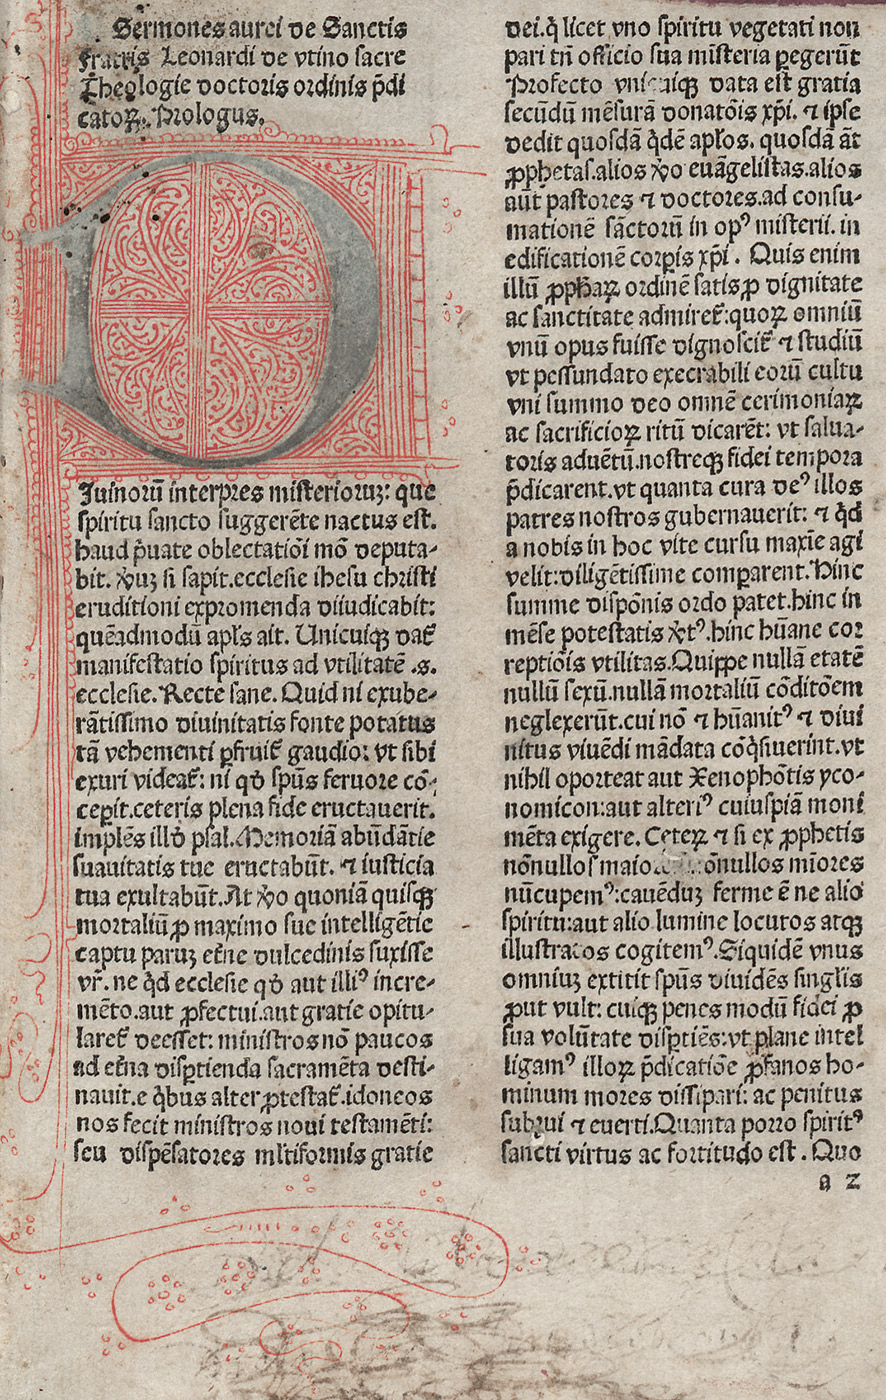 Lot 1022, Auction  115, Leonardus de Utino, Sermones aurei de sanctis. Venedig